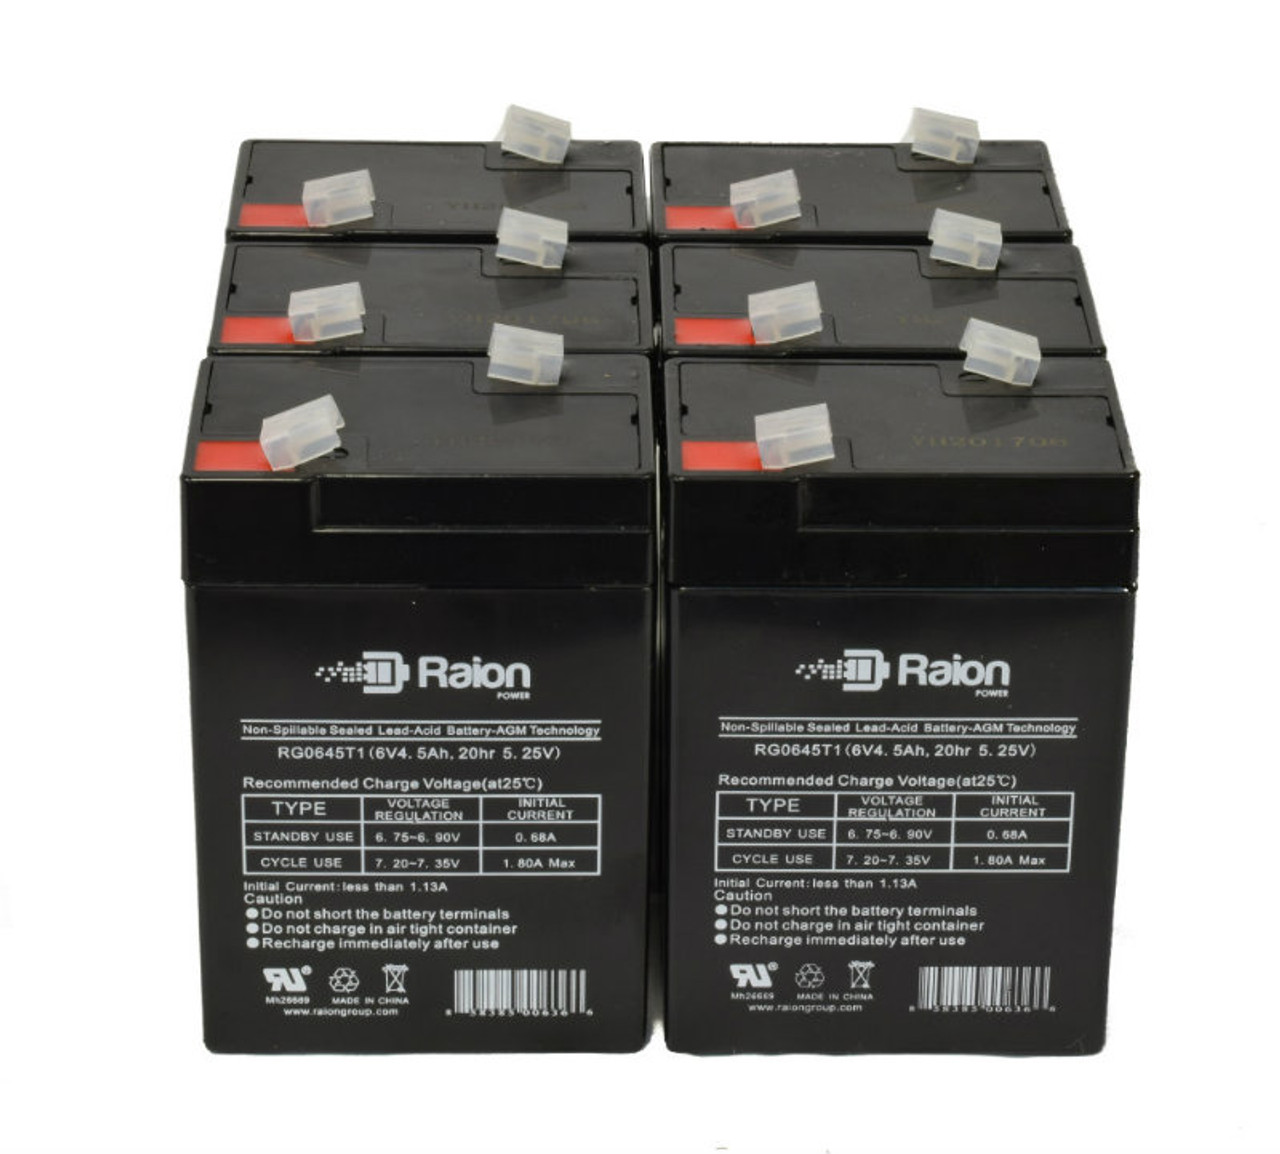 Raion Power 6V 4.5Ah Replacement Emergency Light Battery for Prescolite E56060 - 6 Pack